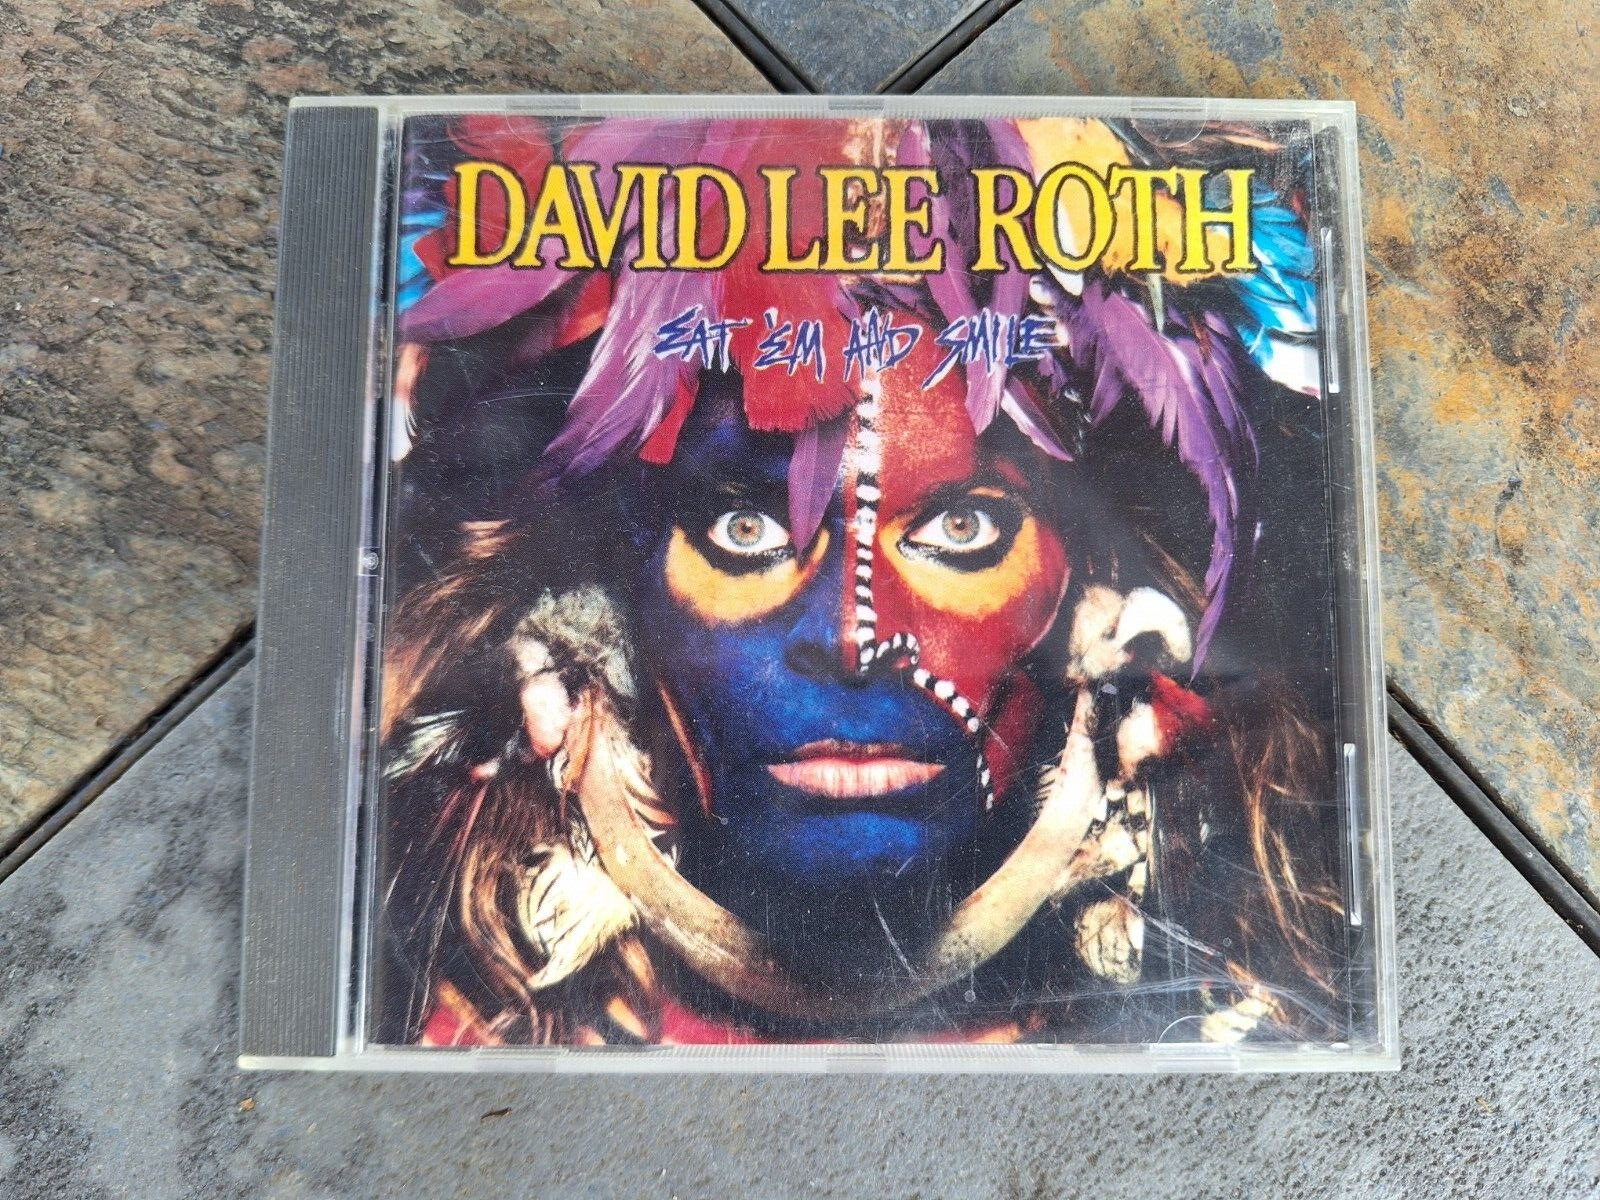 David Lee Roth Eat Em And Smile CD